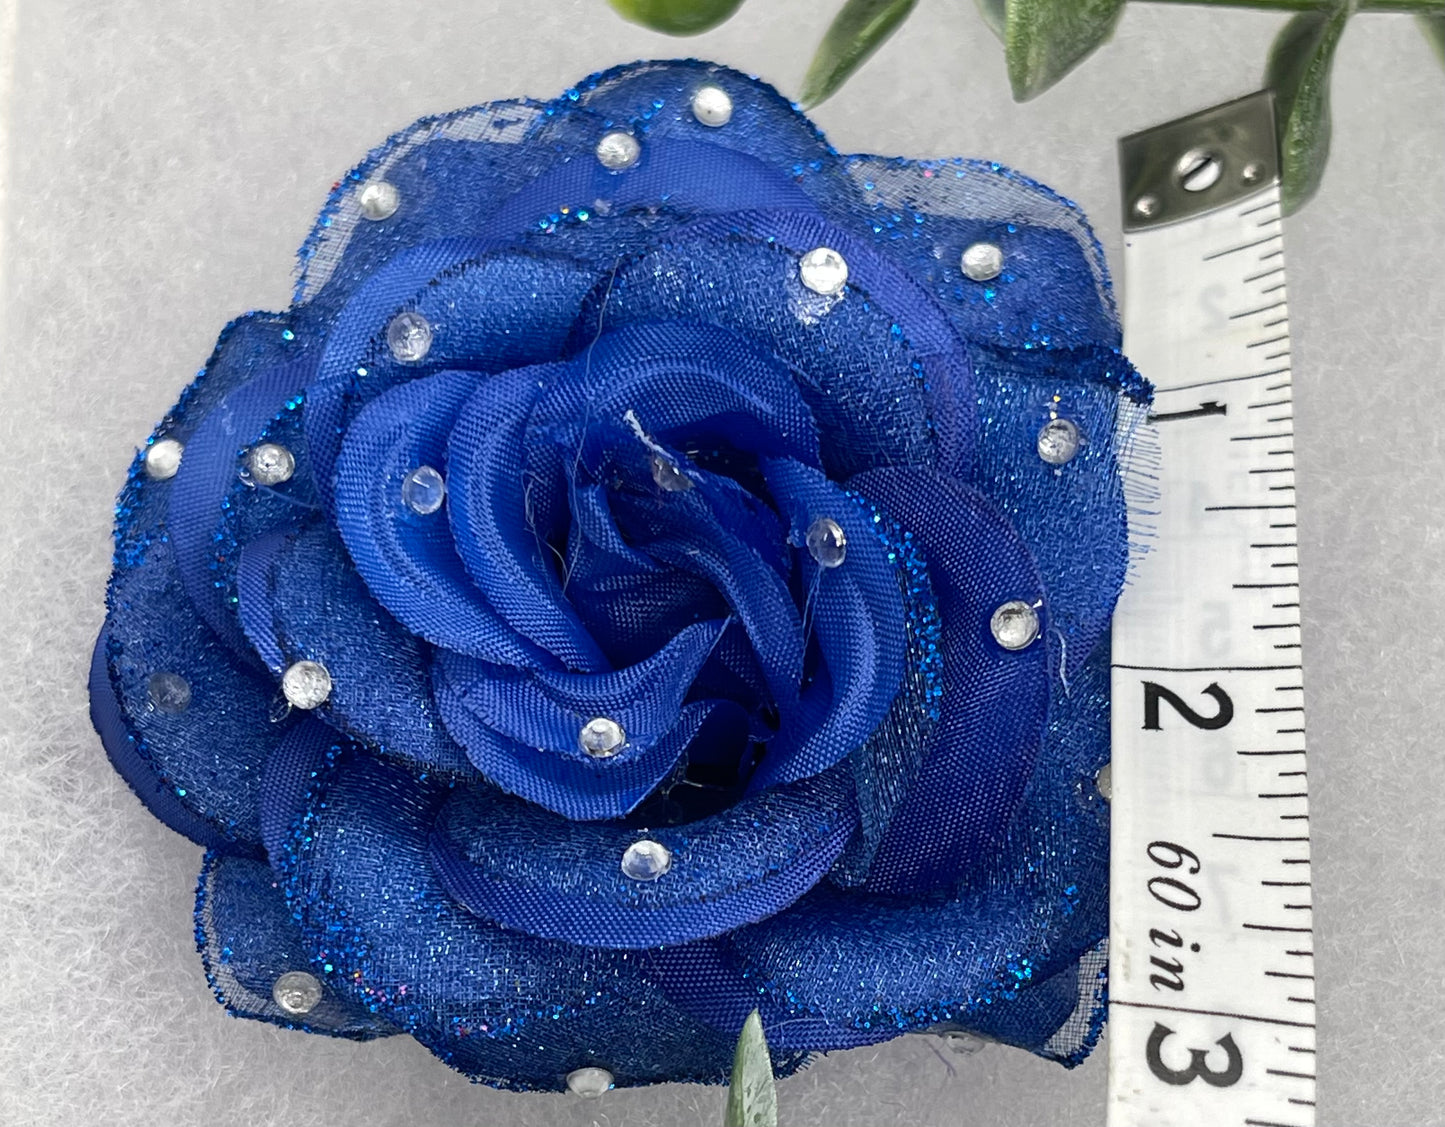 Blue Rose flower crystal rhinestone embellished alligator clip approximately 3.0” formal hair accessory wedding bridal